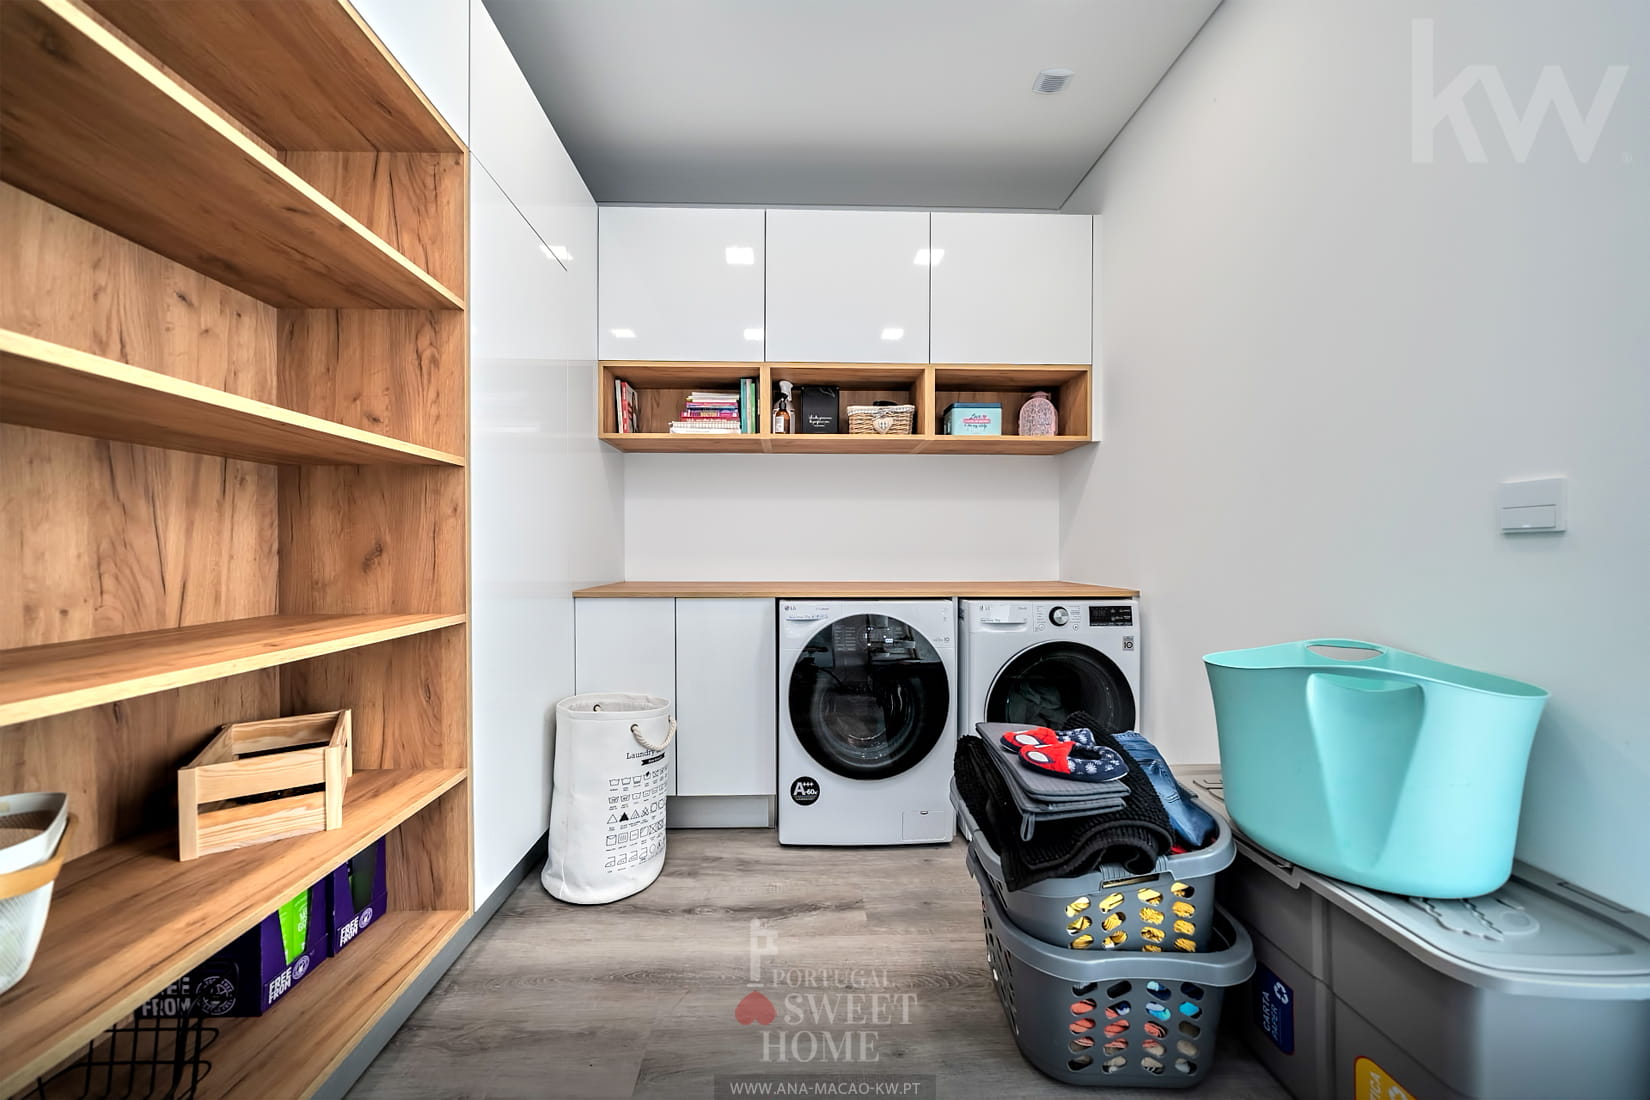 Storage / laundry division (7.5 m2)